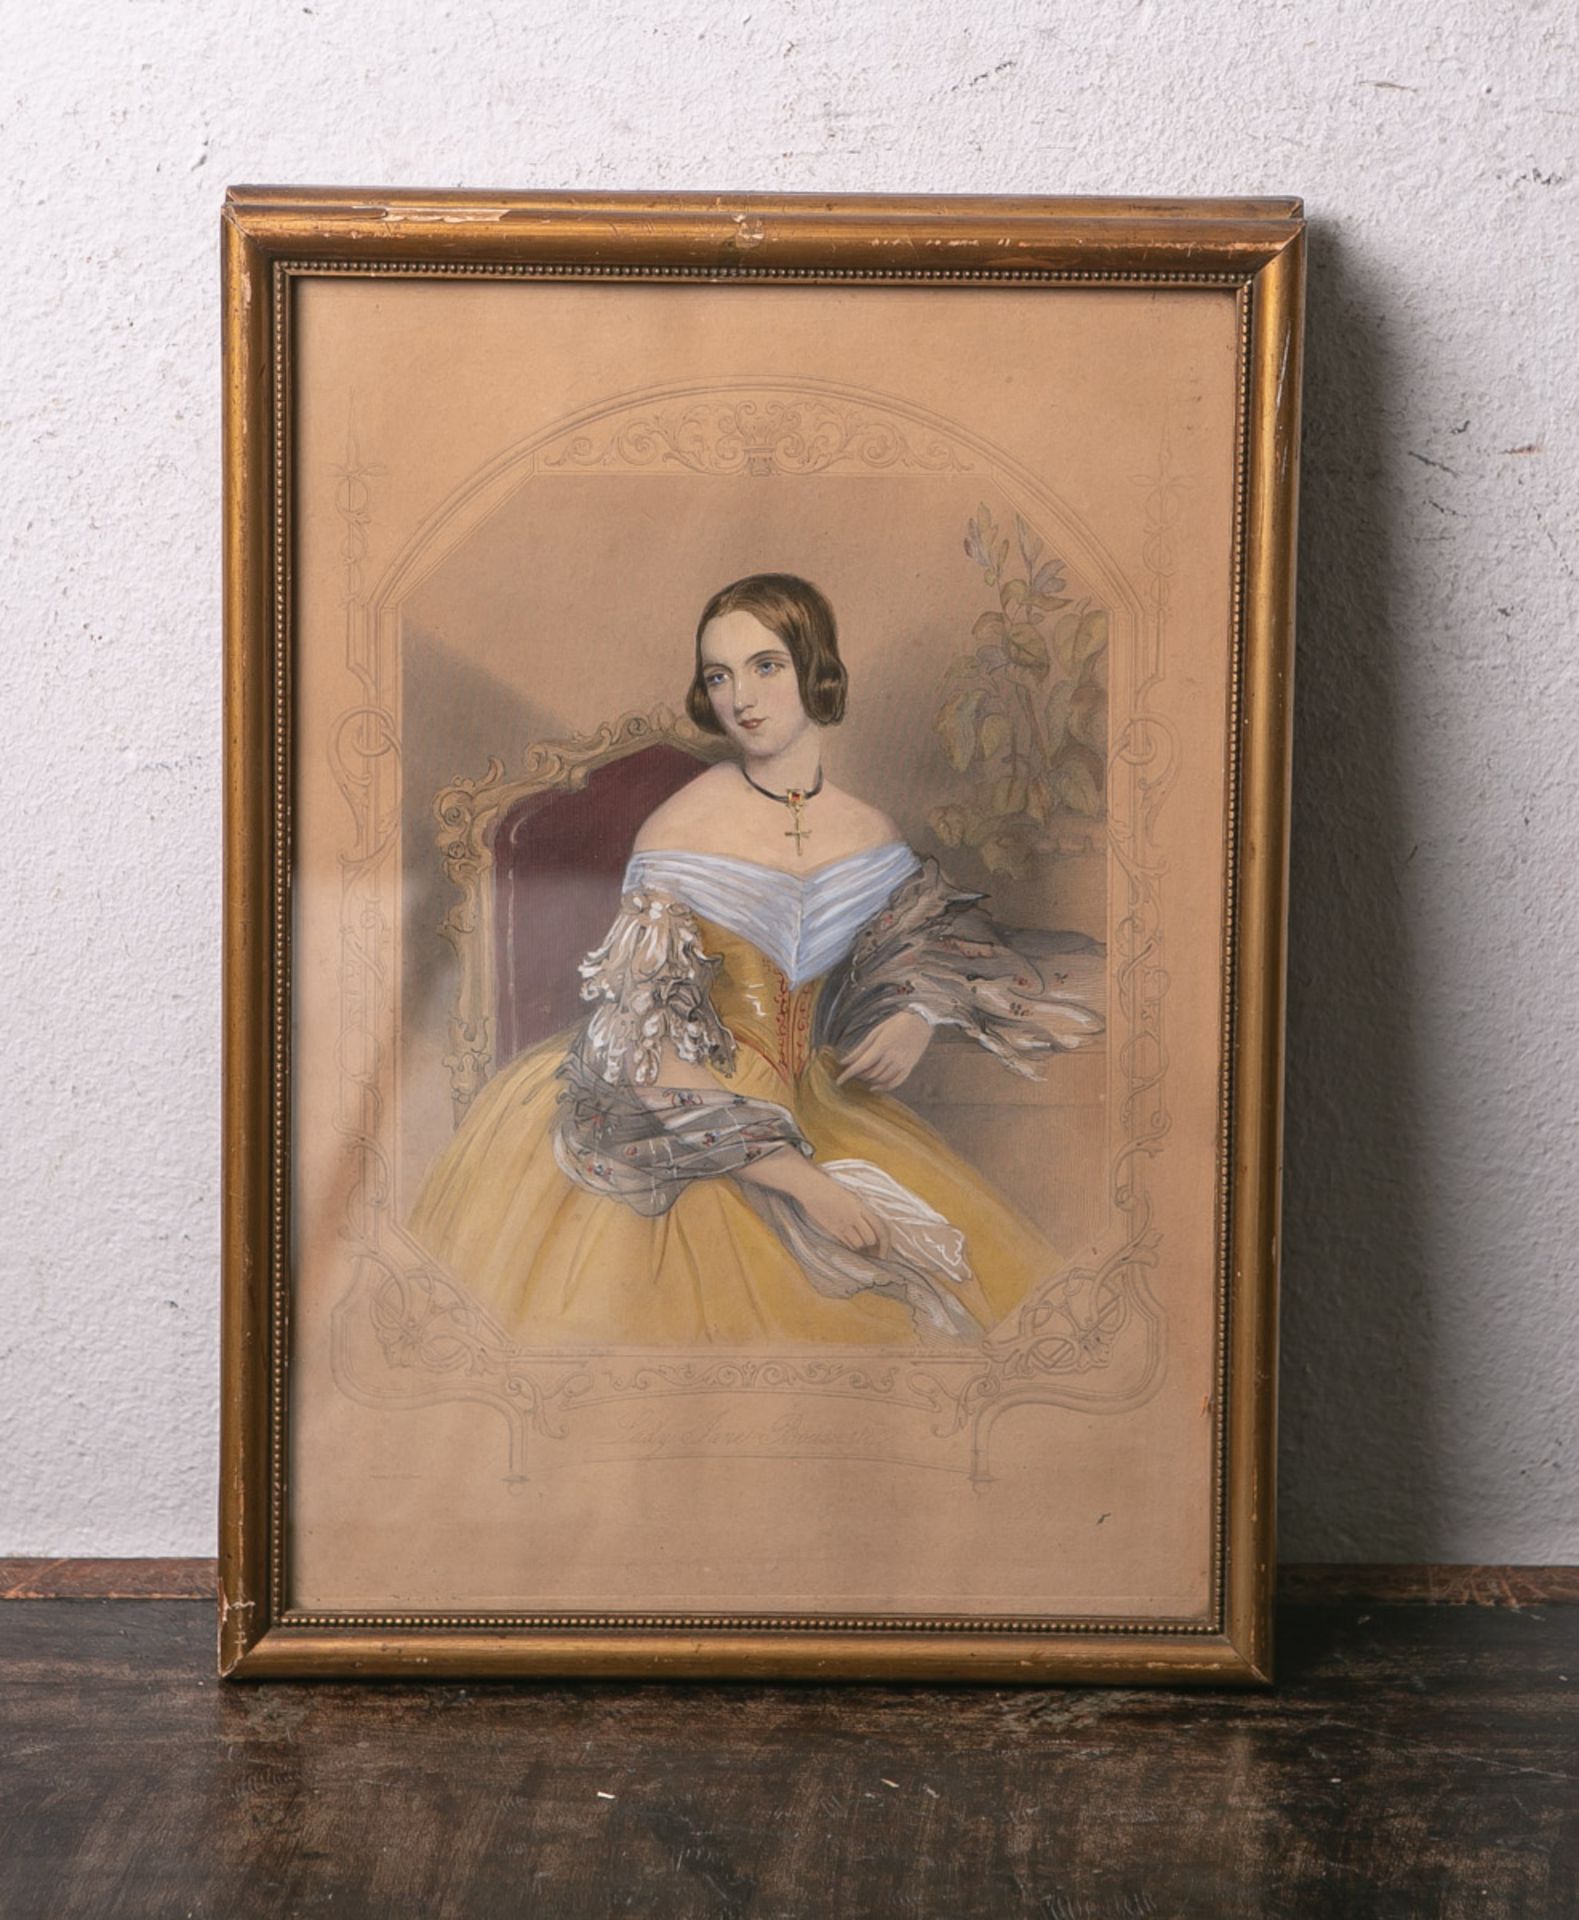 Hayter, John nach (1800 - 1891), "Lady Jane Bouverie", kolorierte Lithographie, Blattgröße